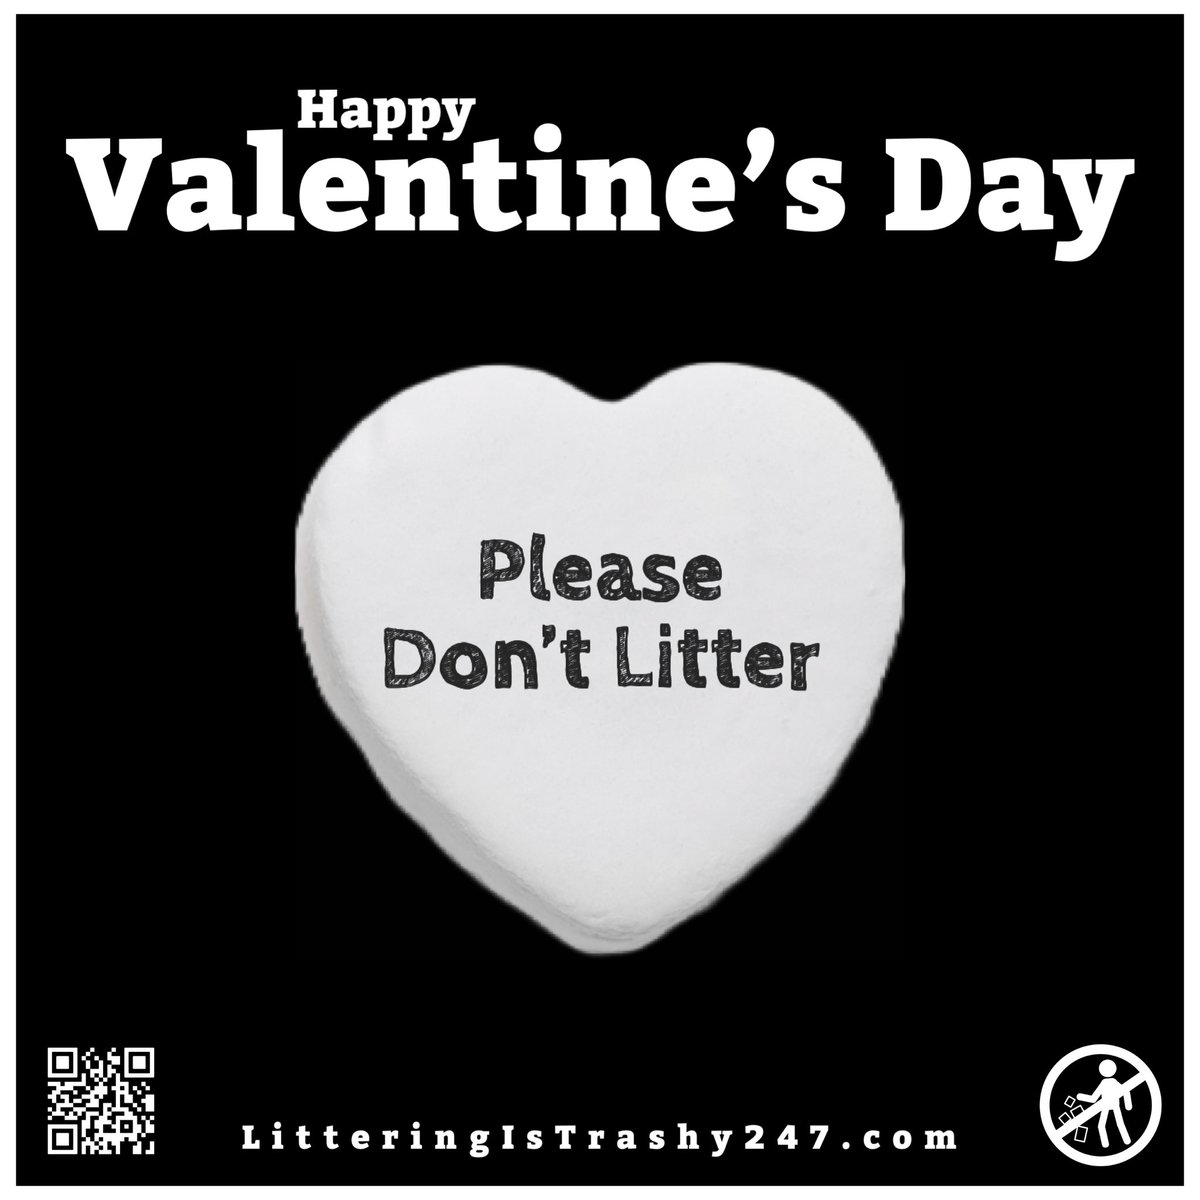 Happy Valentine’s Day!
Please Don’t Litter!
💝🤍🍫🚯

#HappyValentinesDay
#LitteringIsTrashy
#KeepingActive
#LitterCleanup 
#MentalHealth
#PlasticWaste
#StopLittering
#TeamLIT247
#LitterPicking
#Community
#Littering
#Litter